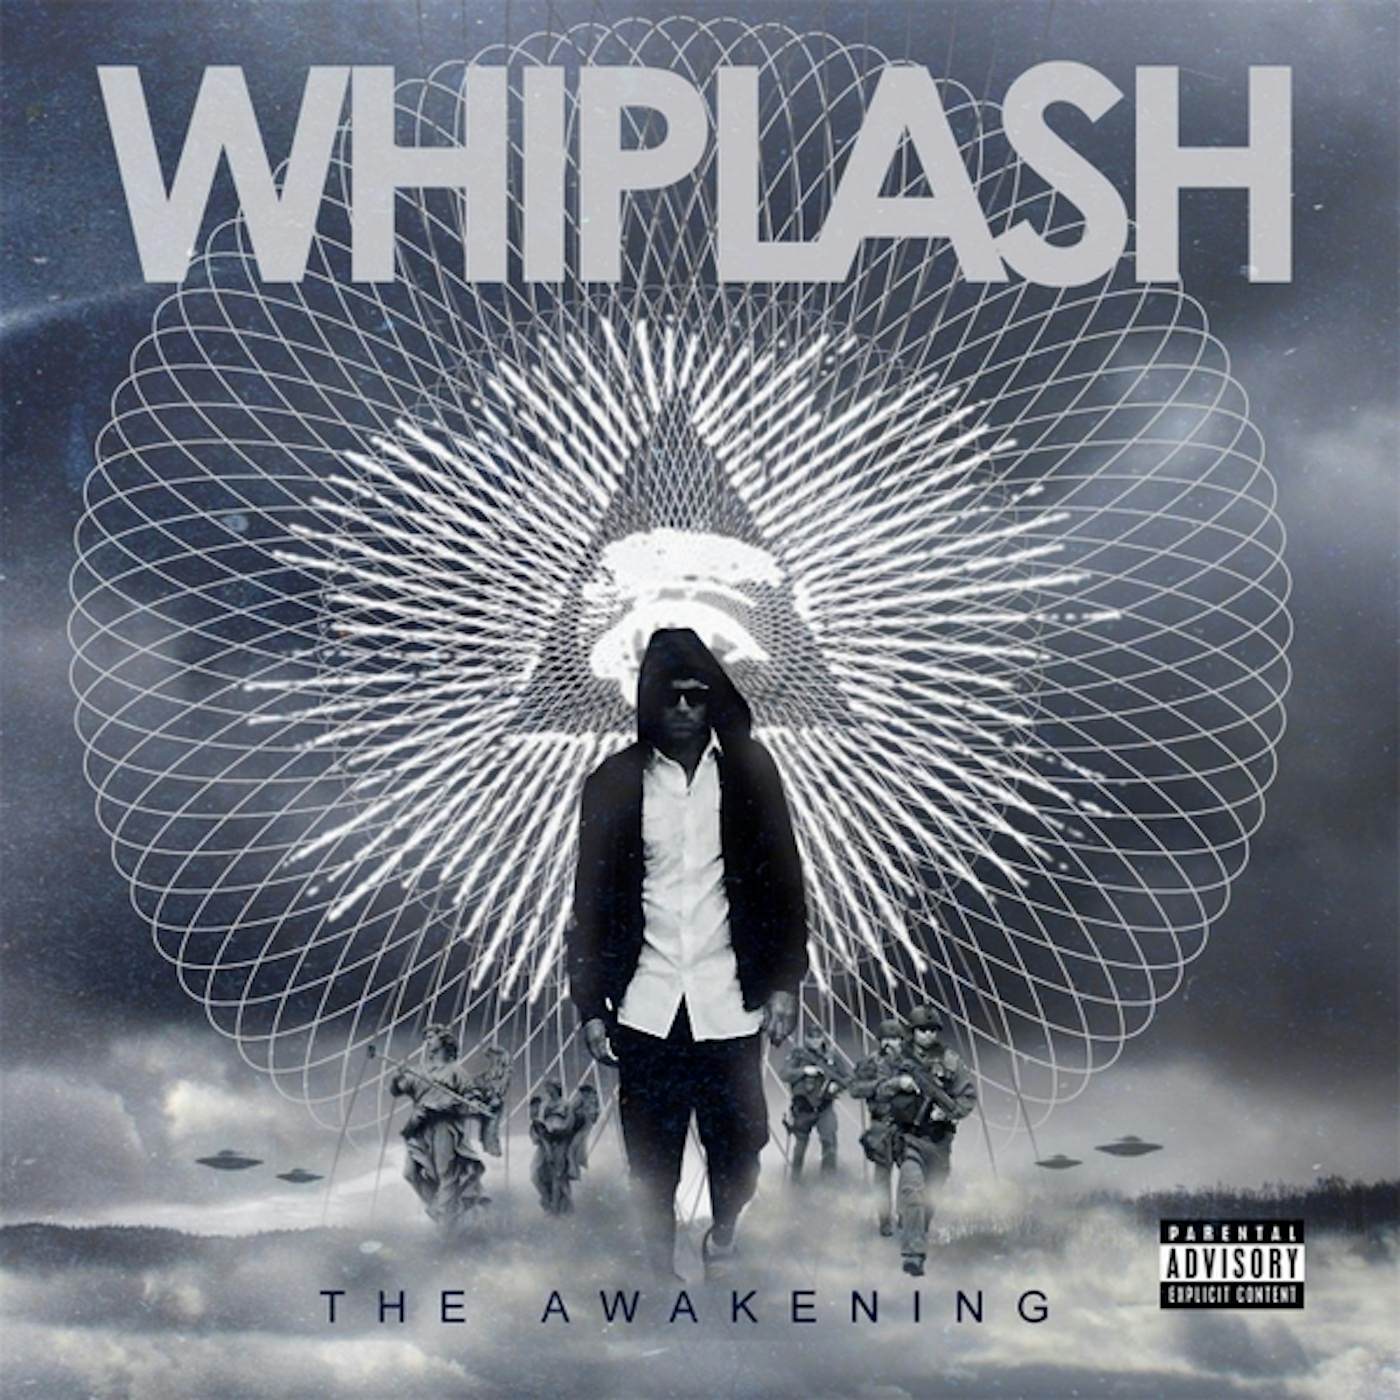 Whiplash THE AWAKENING CD